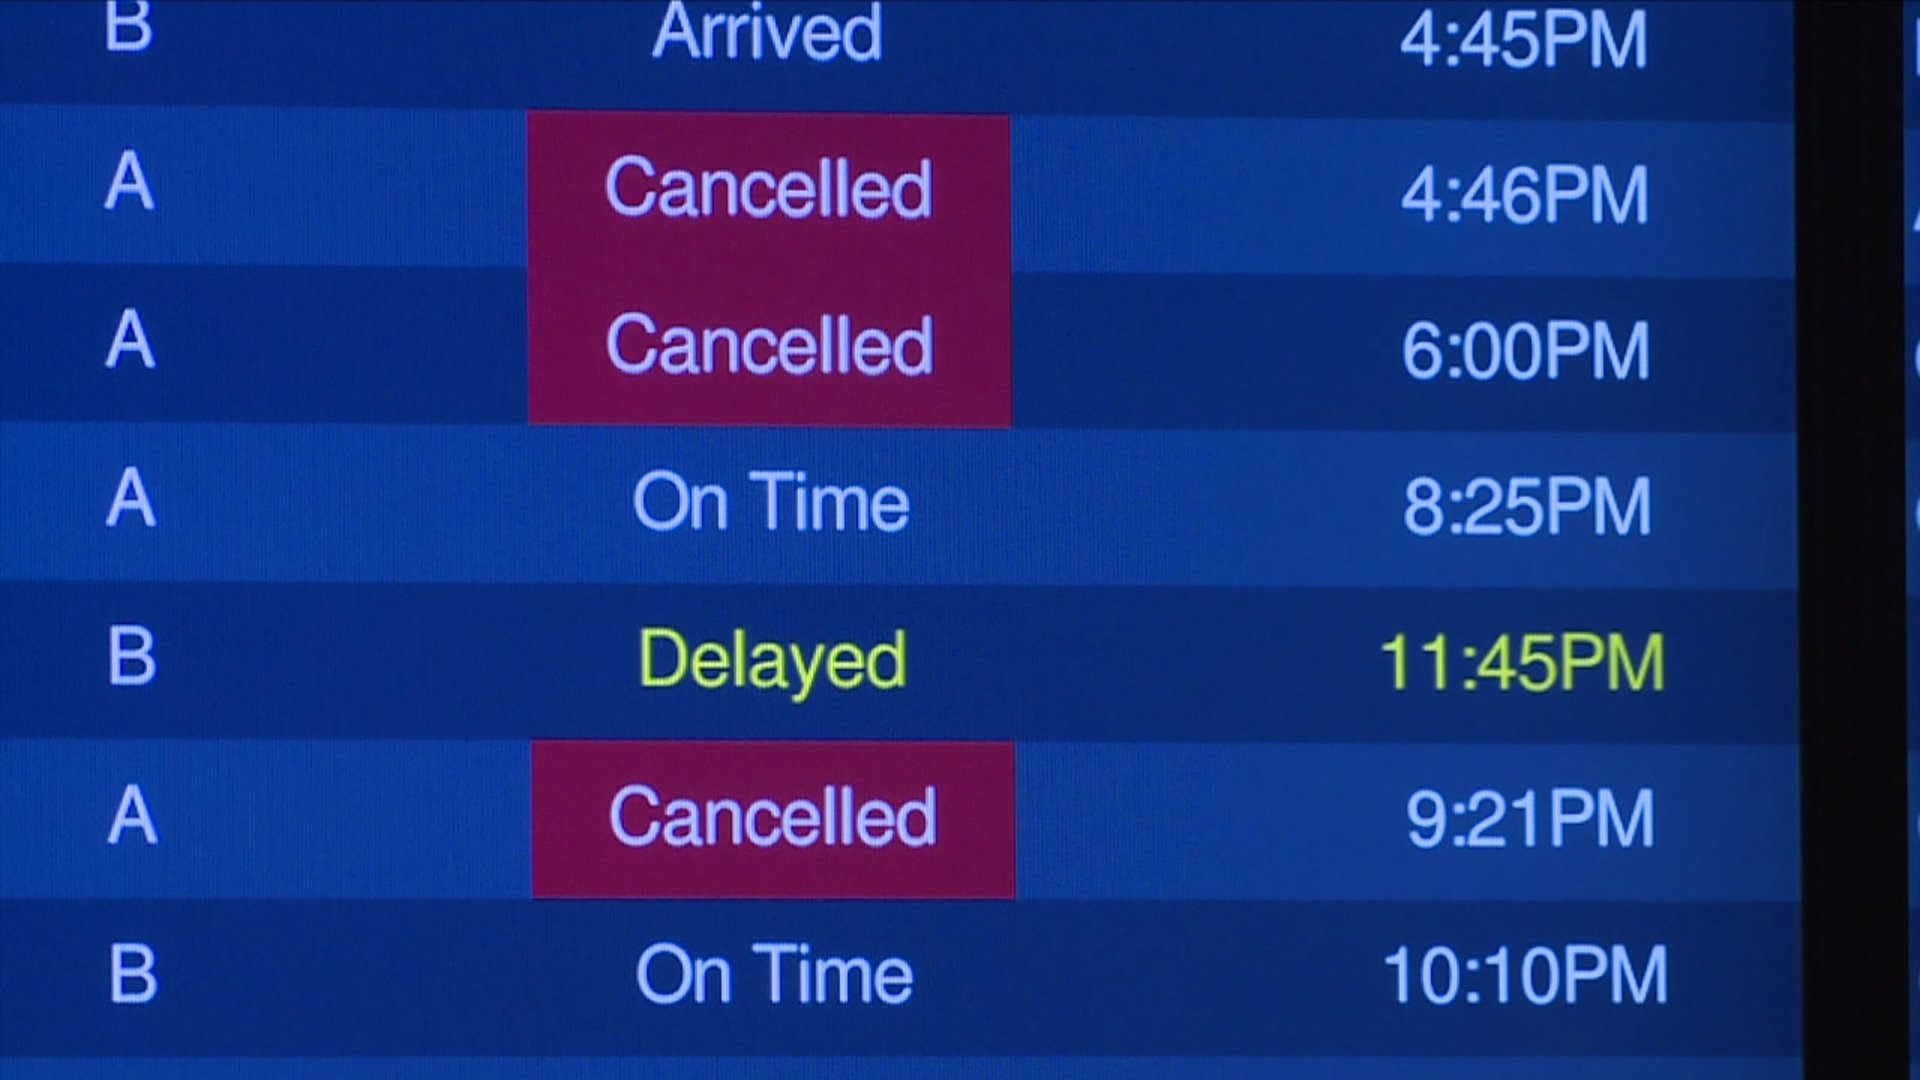 Weather causes flight delays